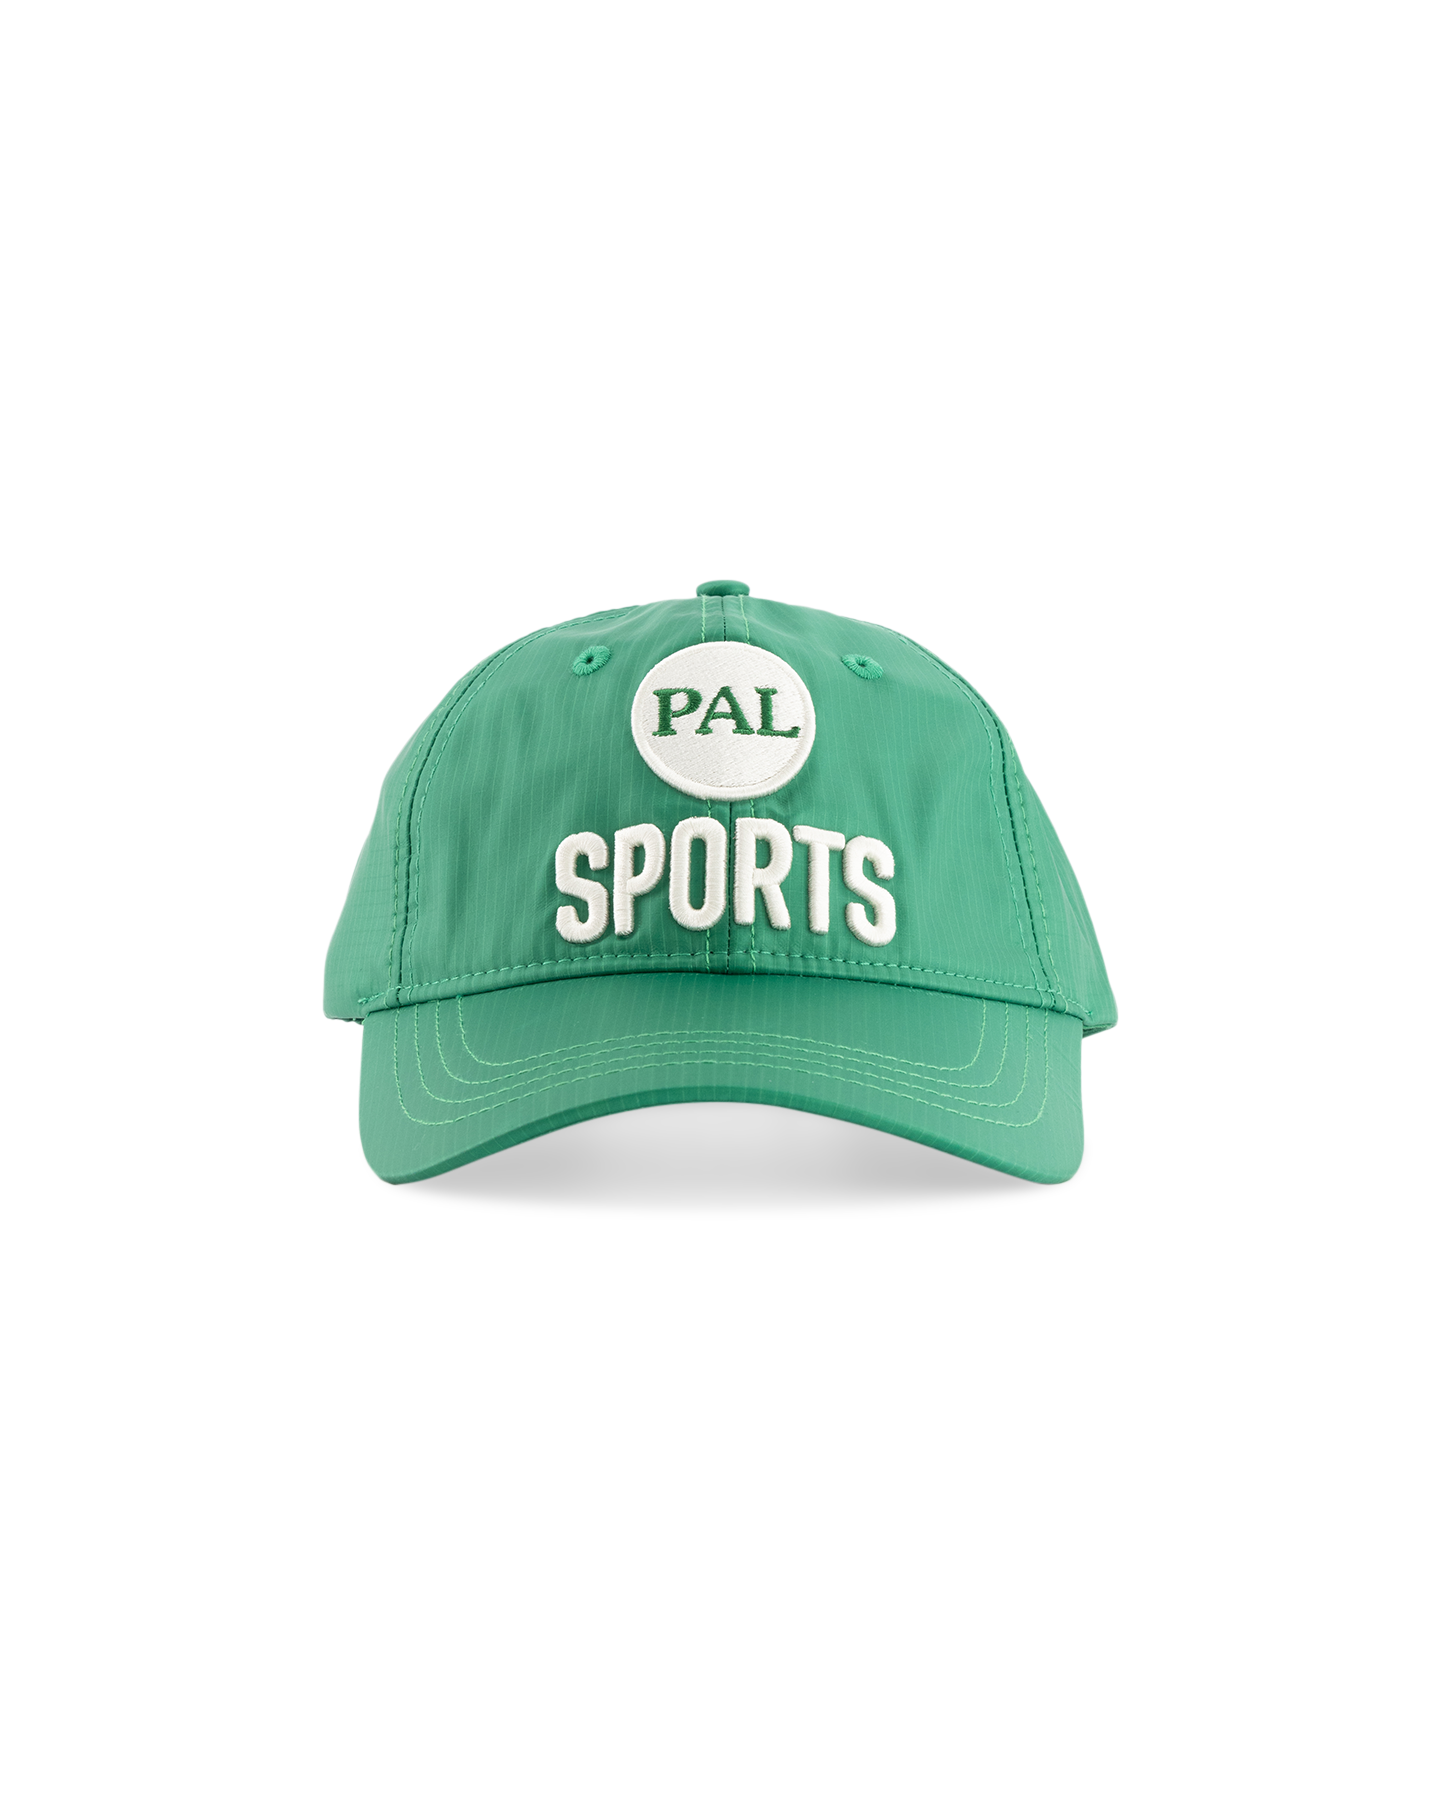 PAL Sporting Goods Broadcast Cap GROEN 2